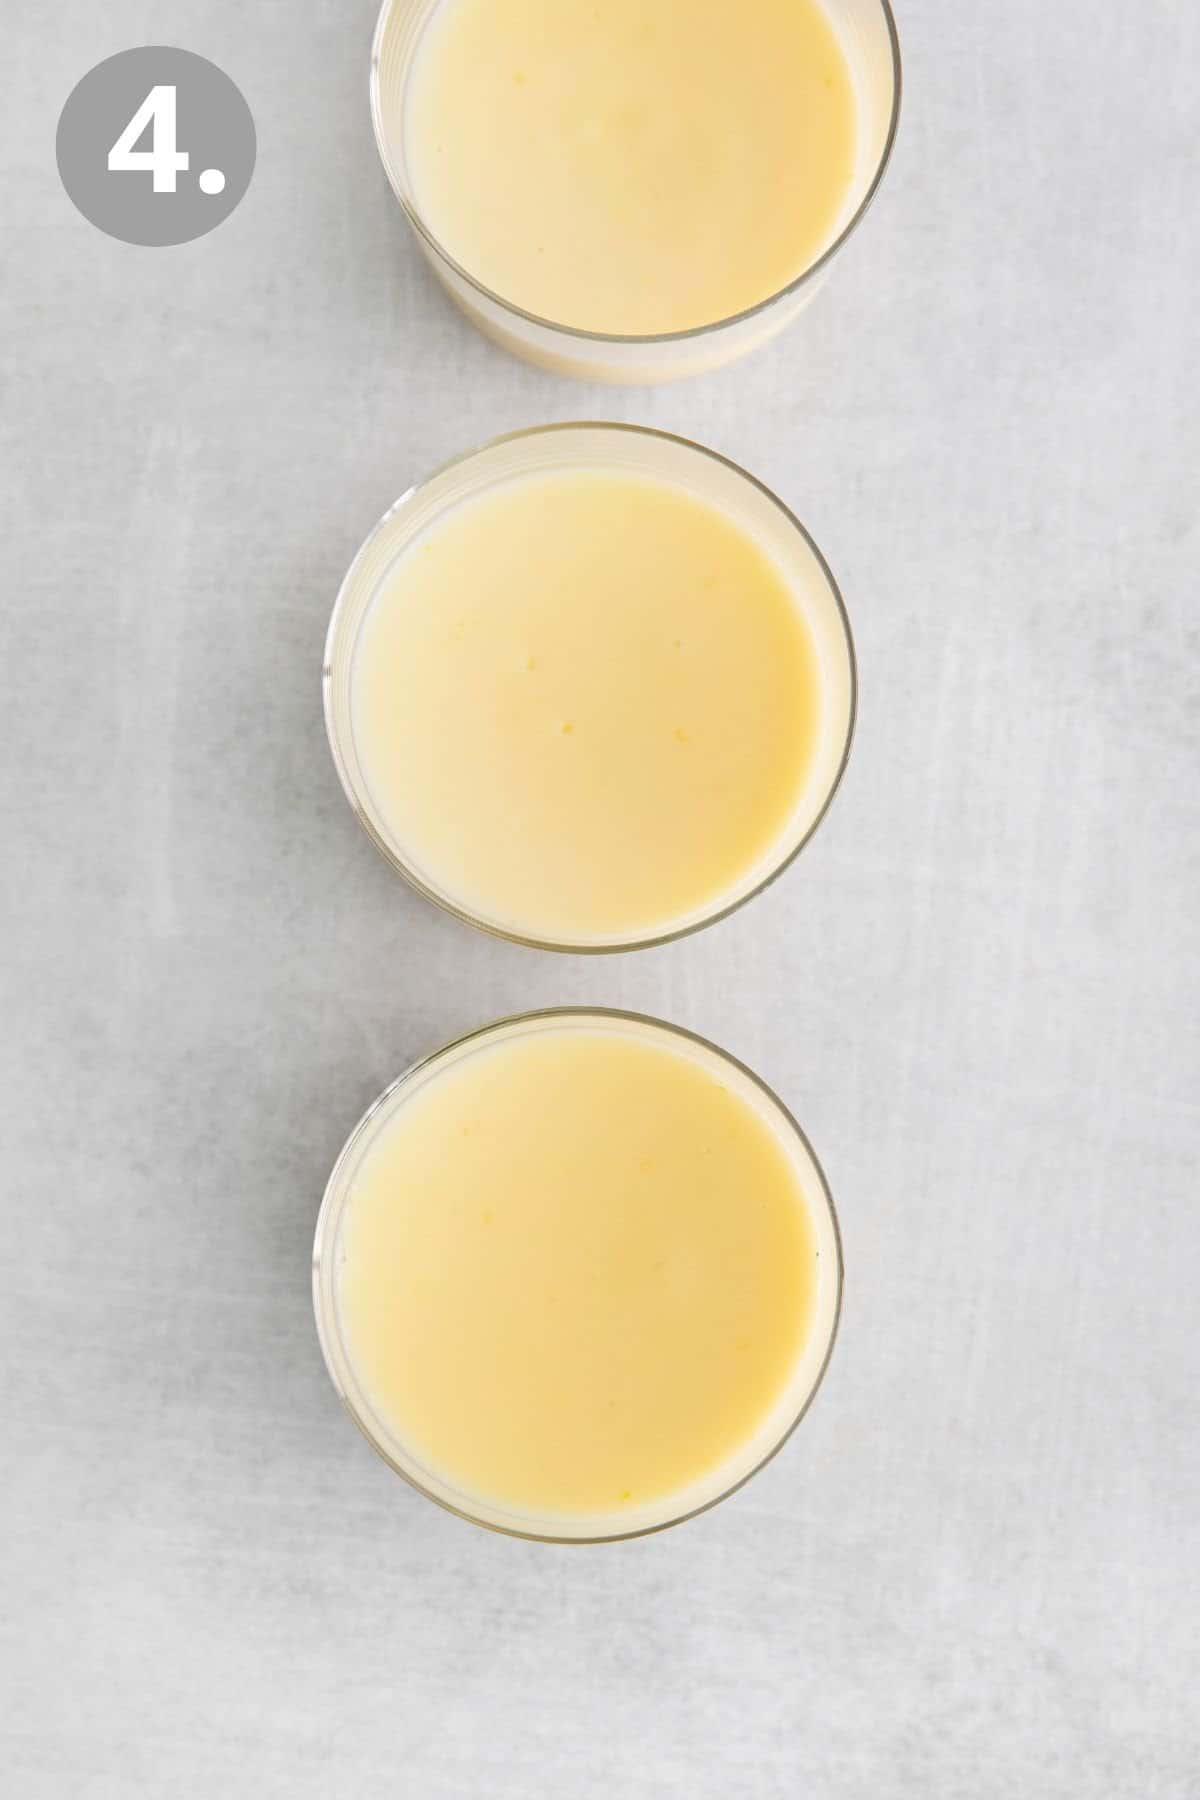 Lemon posset in three individual ramekins on a counter top